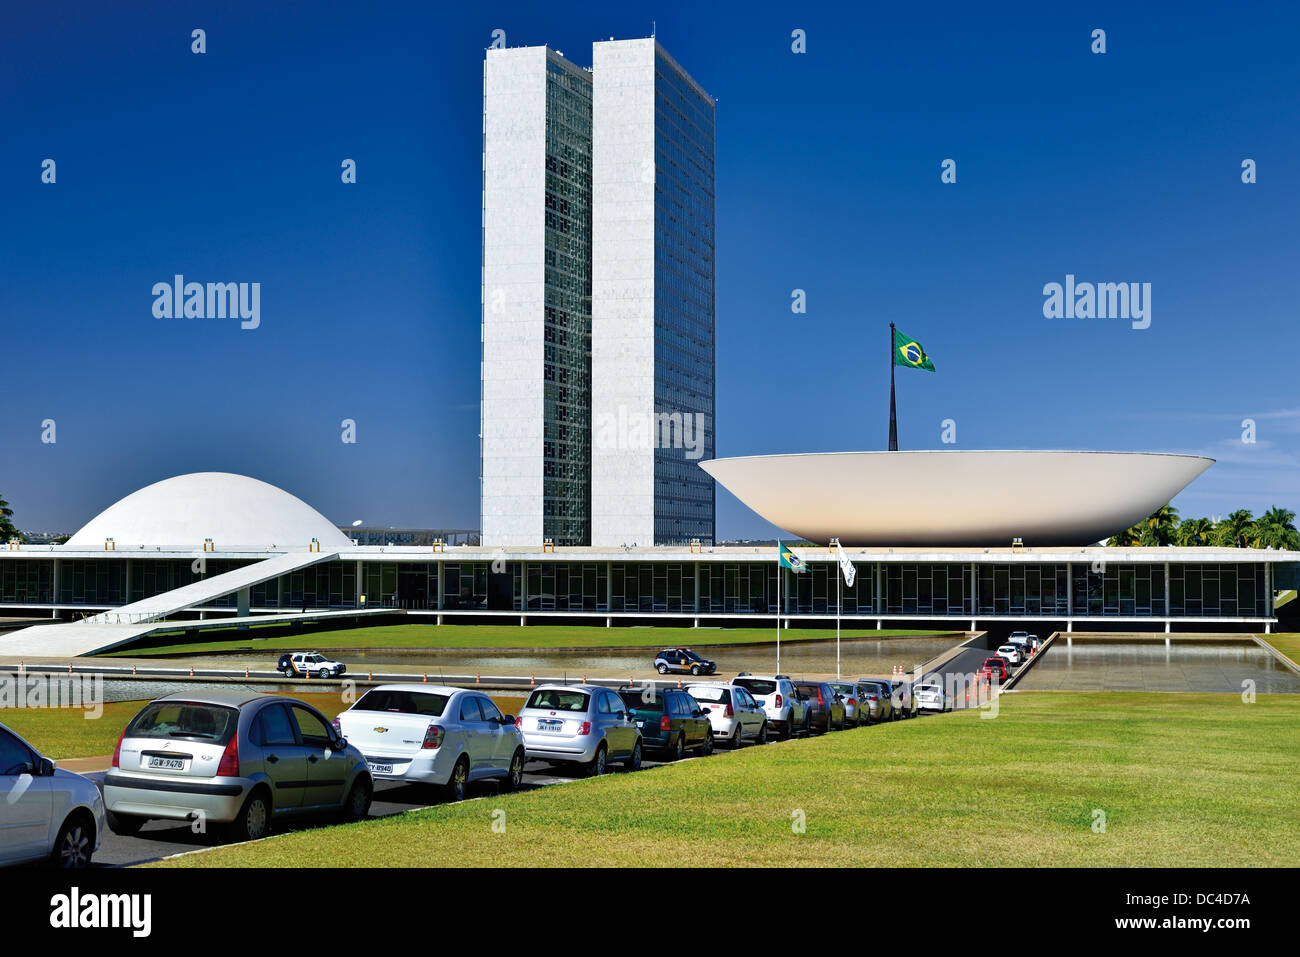 Brazil, Brasilia: Distant view of the building of the national congress 'Congresso Nacional' Stock Photo